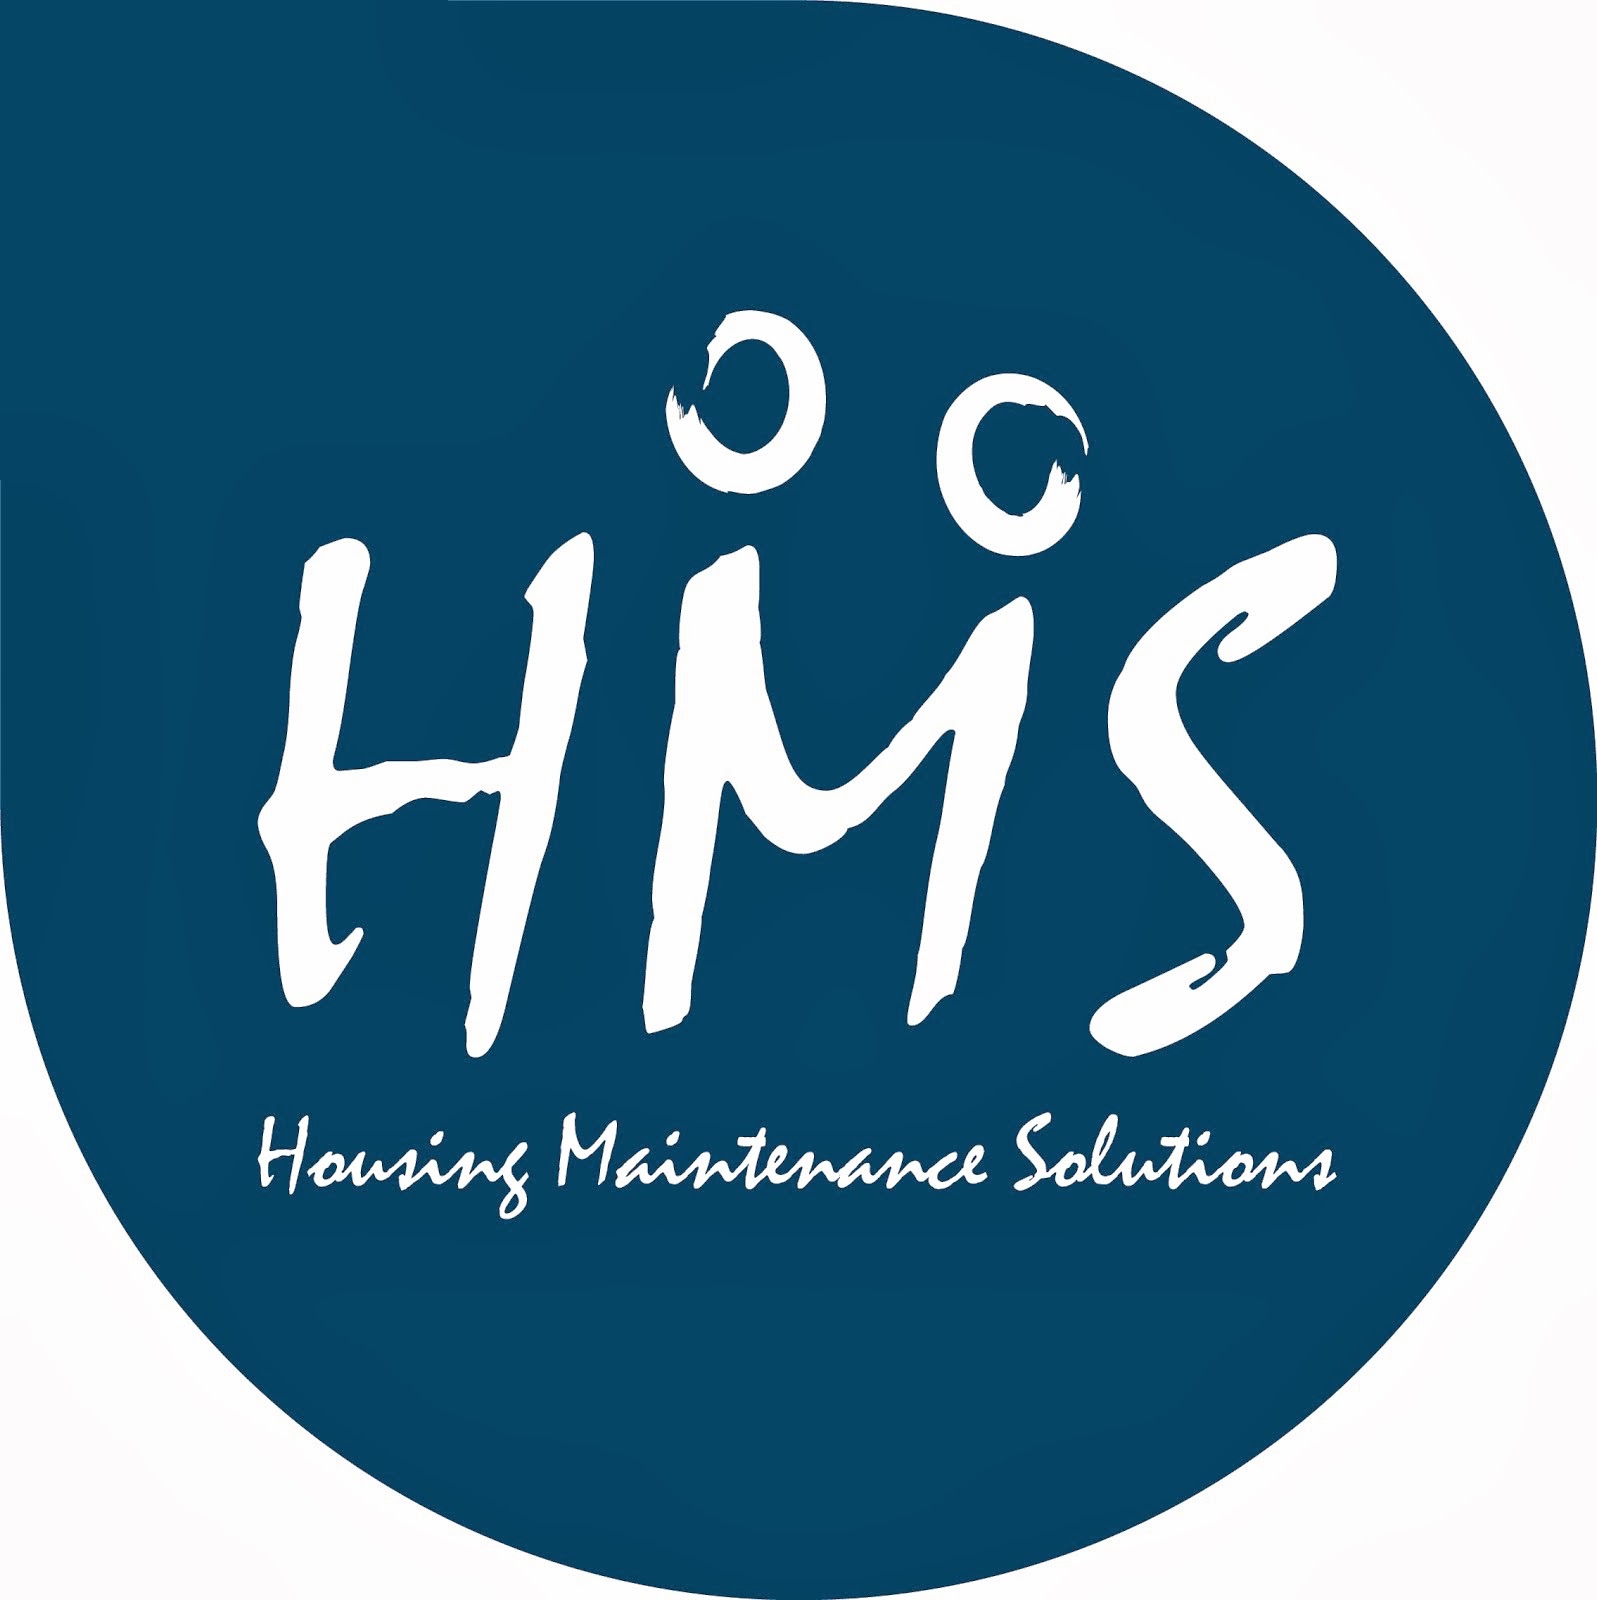 Housing Maintenance Solutions